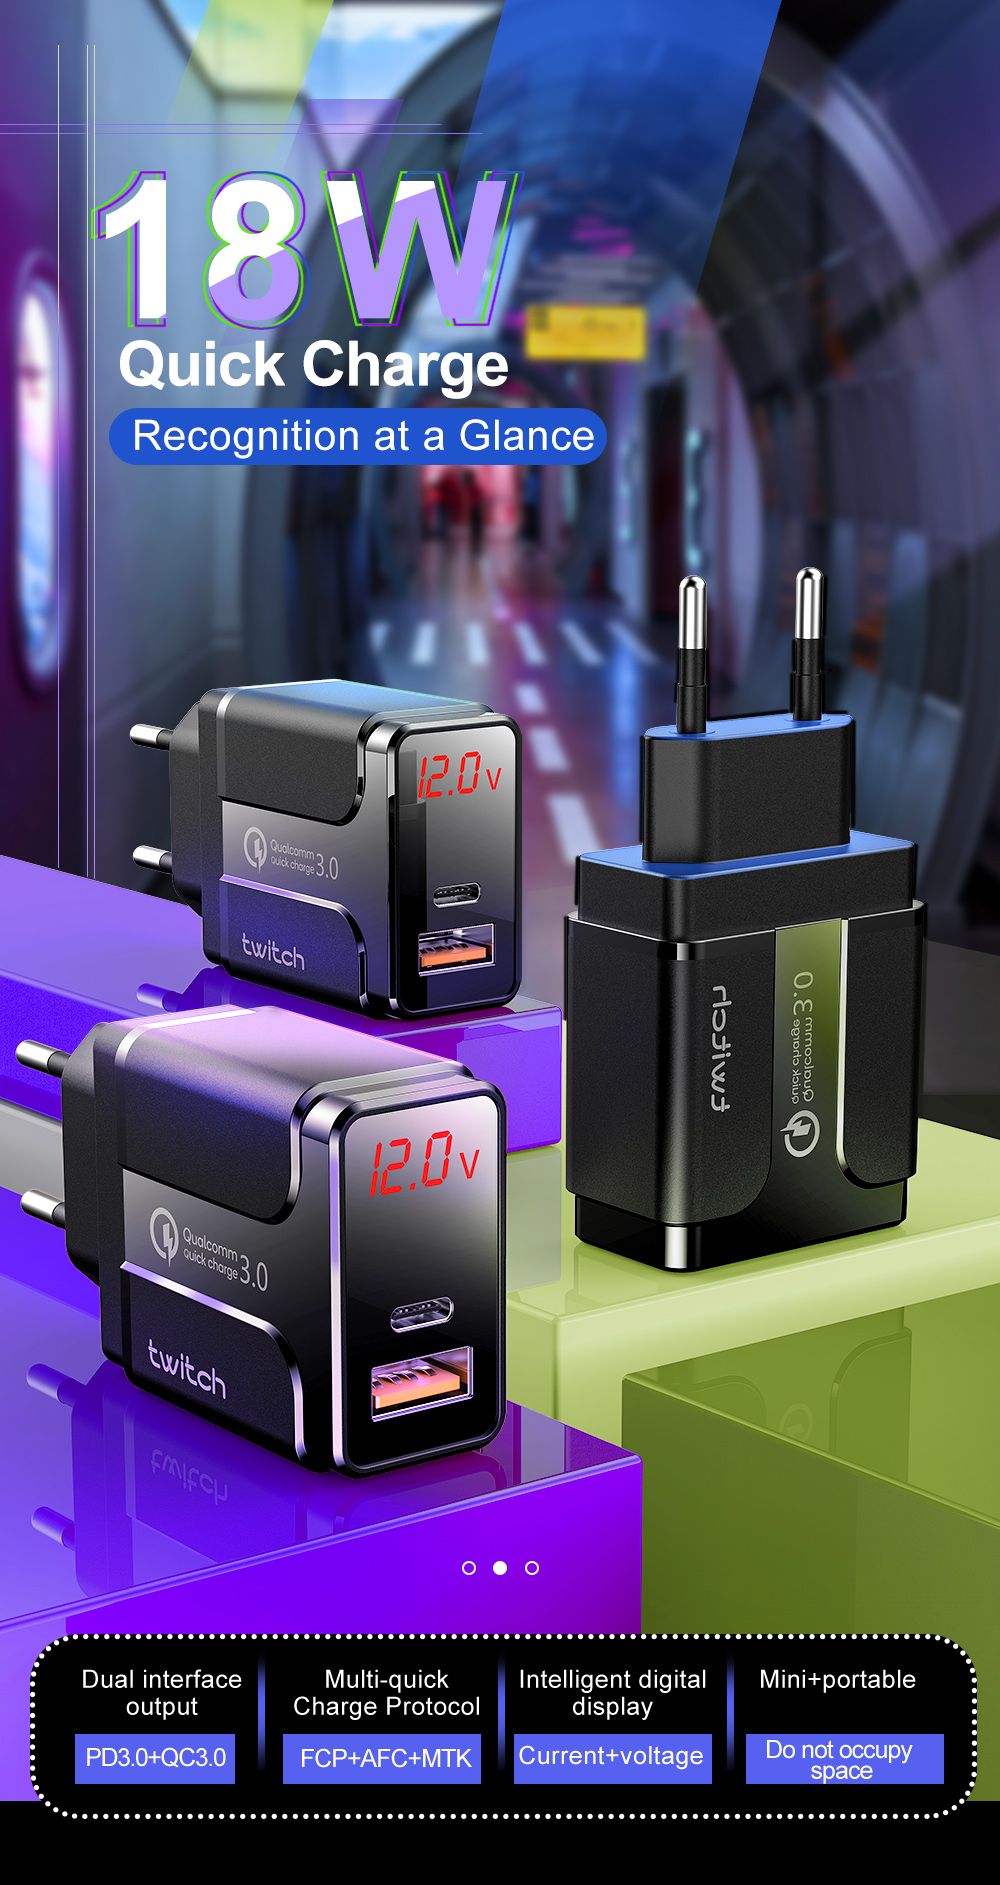 Twitch-18W-Type-C-QC30-USB-Charger-For-iPhone-XS-11Pro-Huawei-P30-Pro-P40-Xiaomi-Mi10-Redmi-K30-S20--1666553